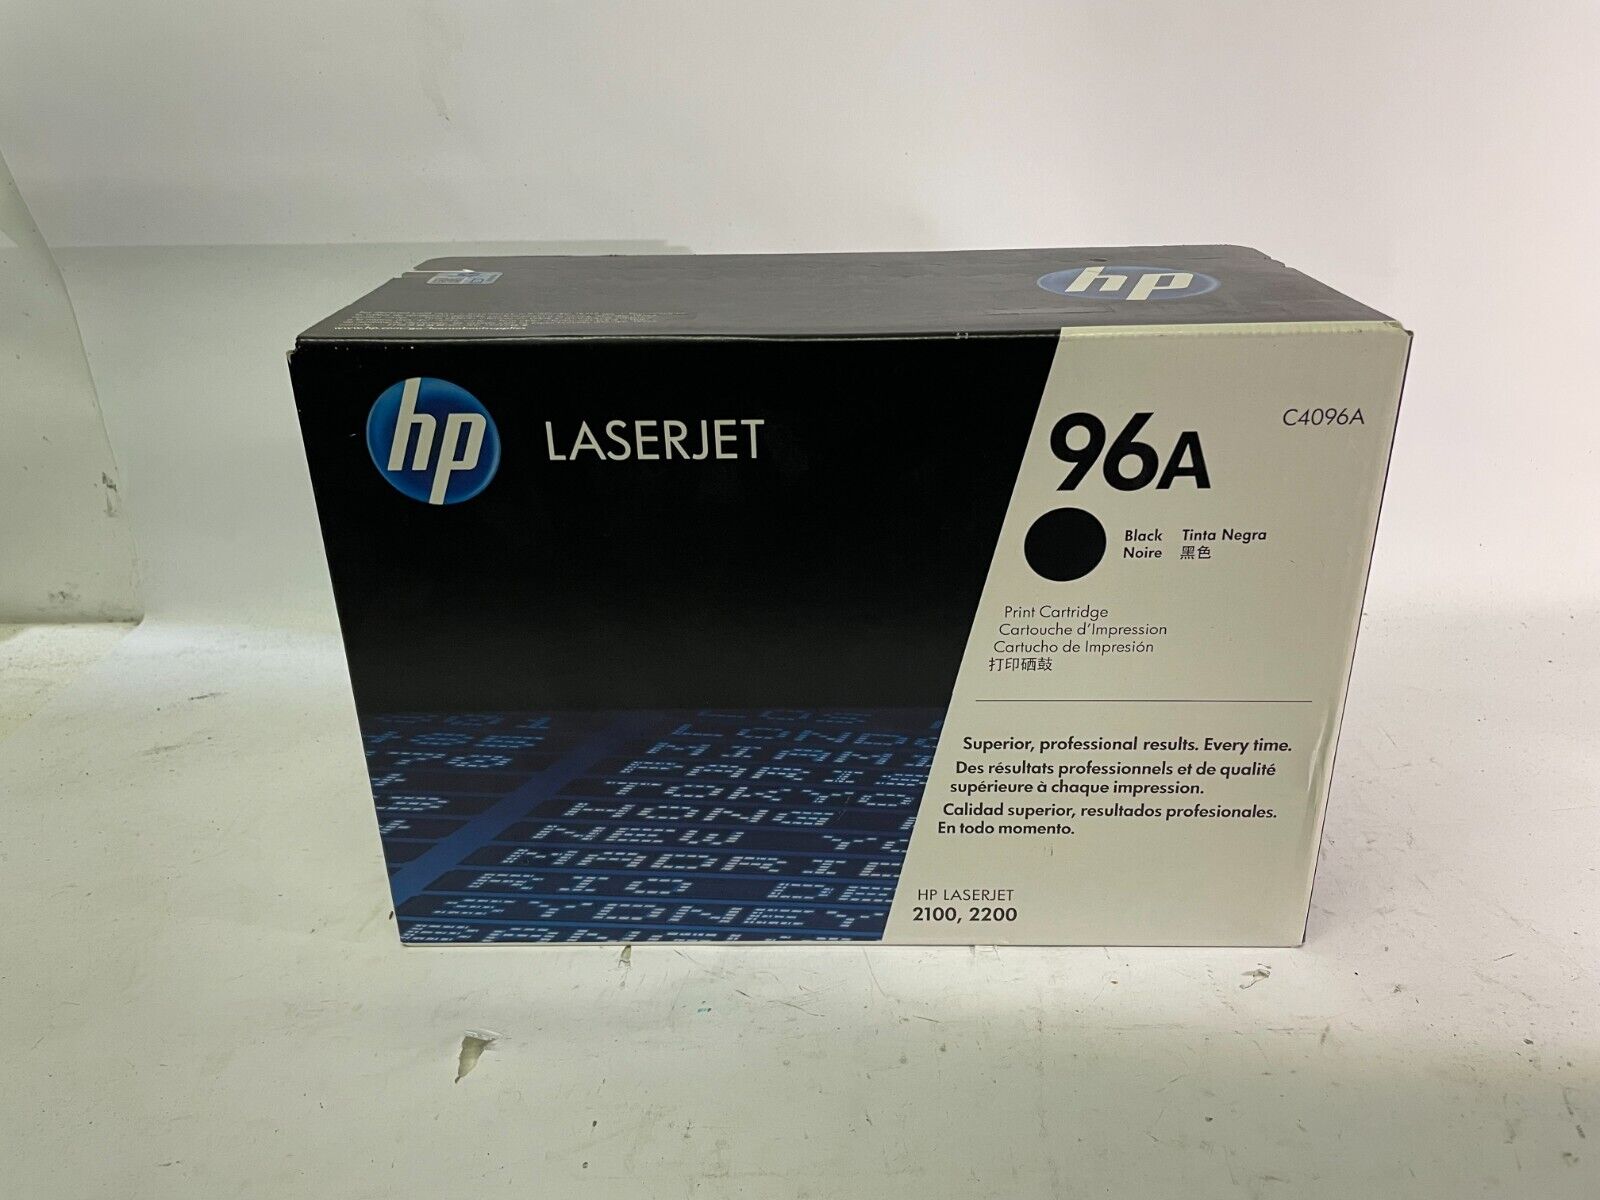 HP LaserJet 2100/2200 Print Cartridge 96A Black Toner C4096A